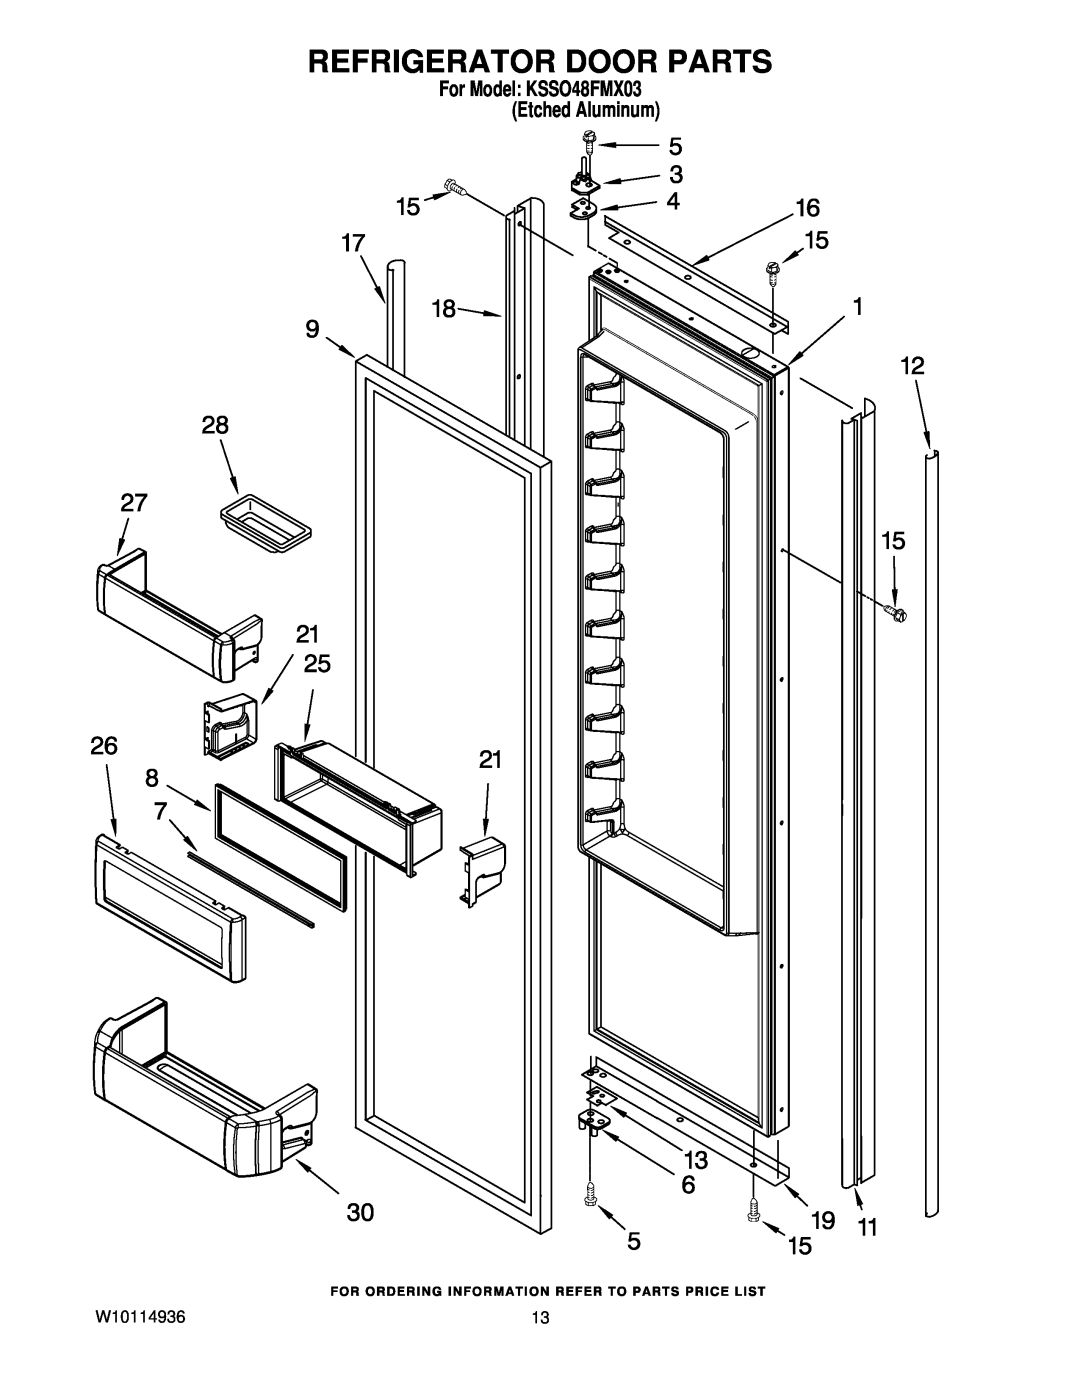 KitchenAid manual Refrigerator Door Parts, W10114936, For Model KSSO48FMX03 Etched Aluminum 